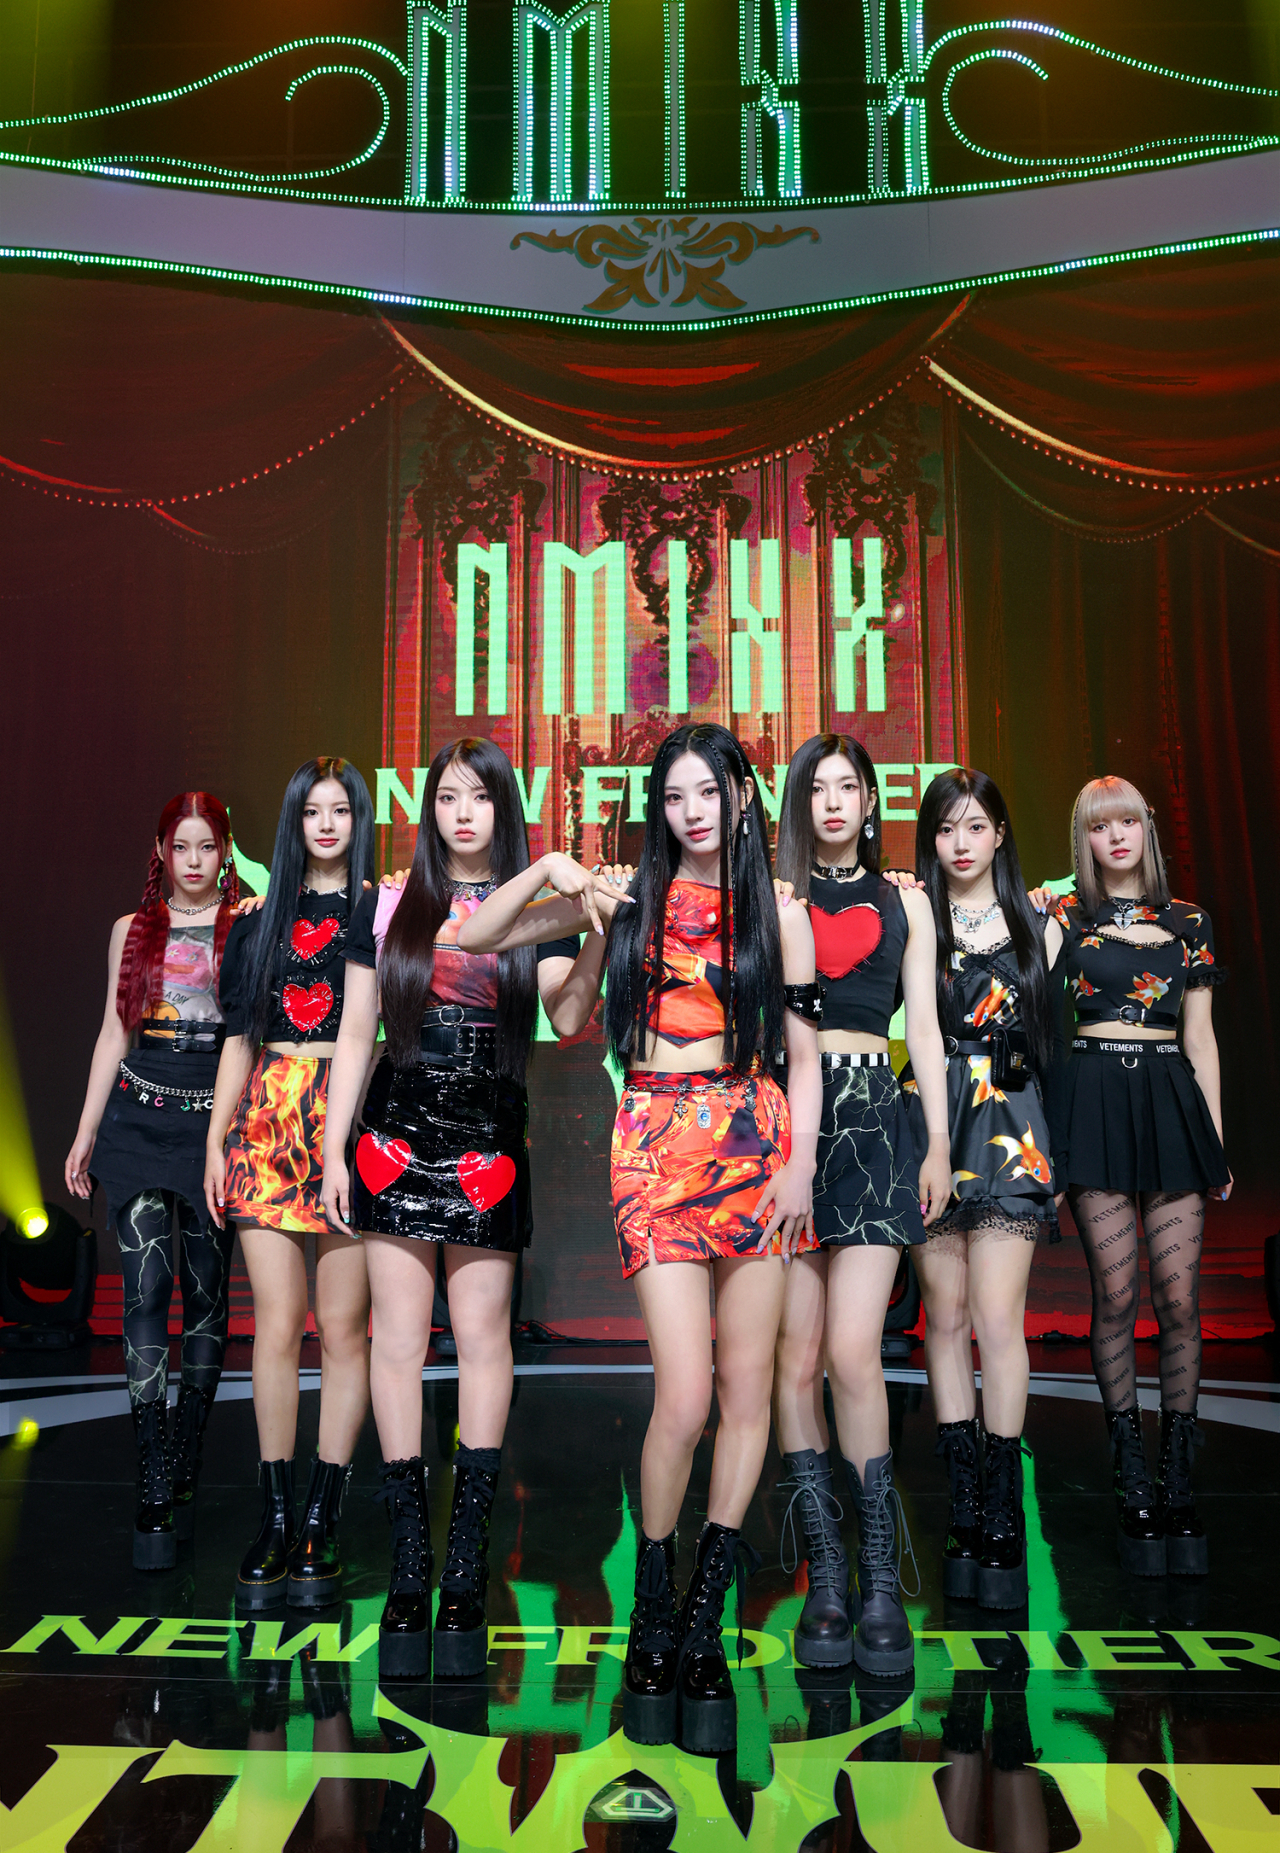 Girl group NMIXX (JYP Entertainment)